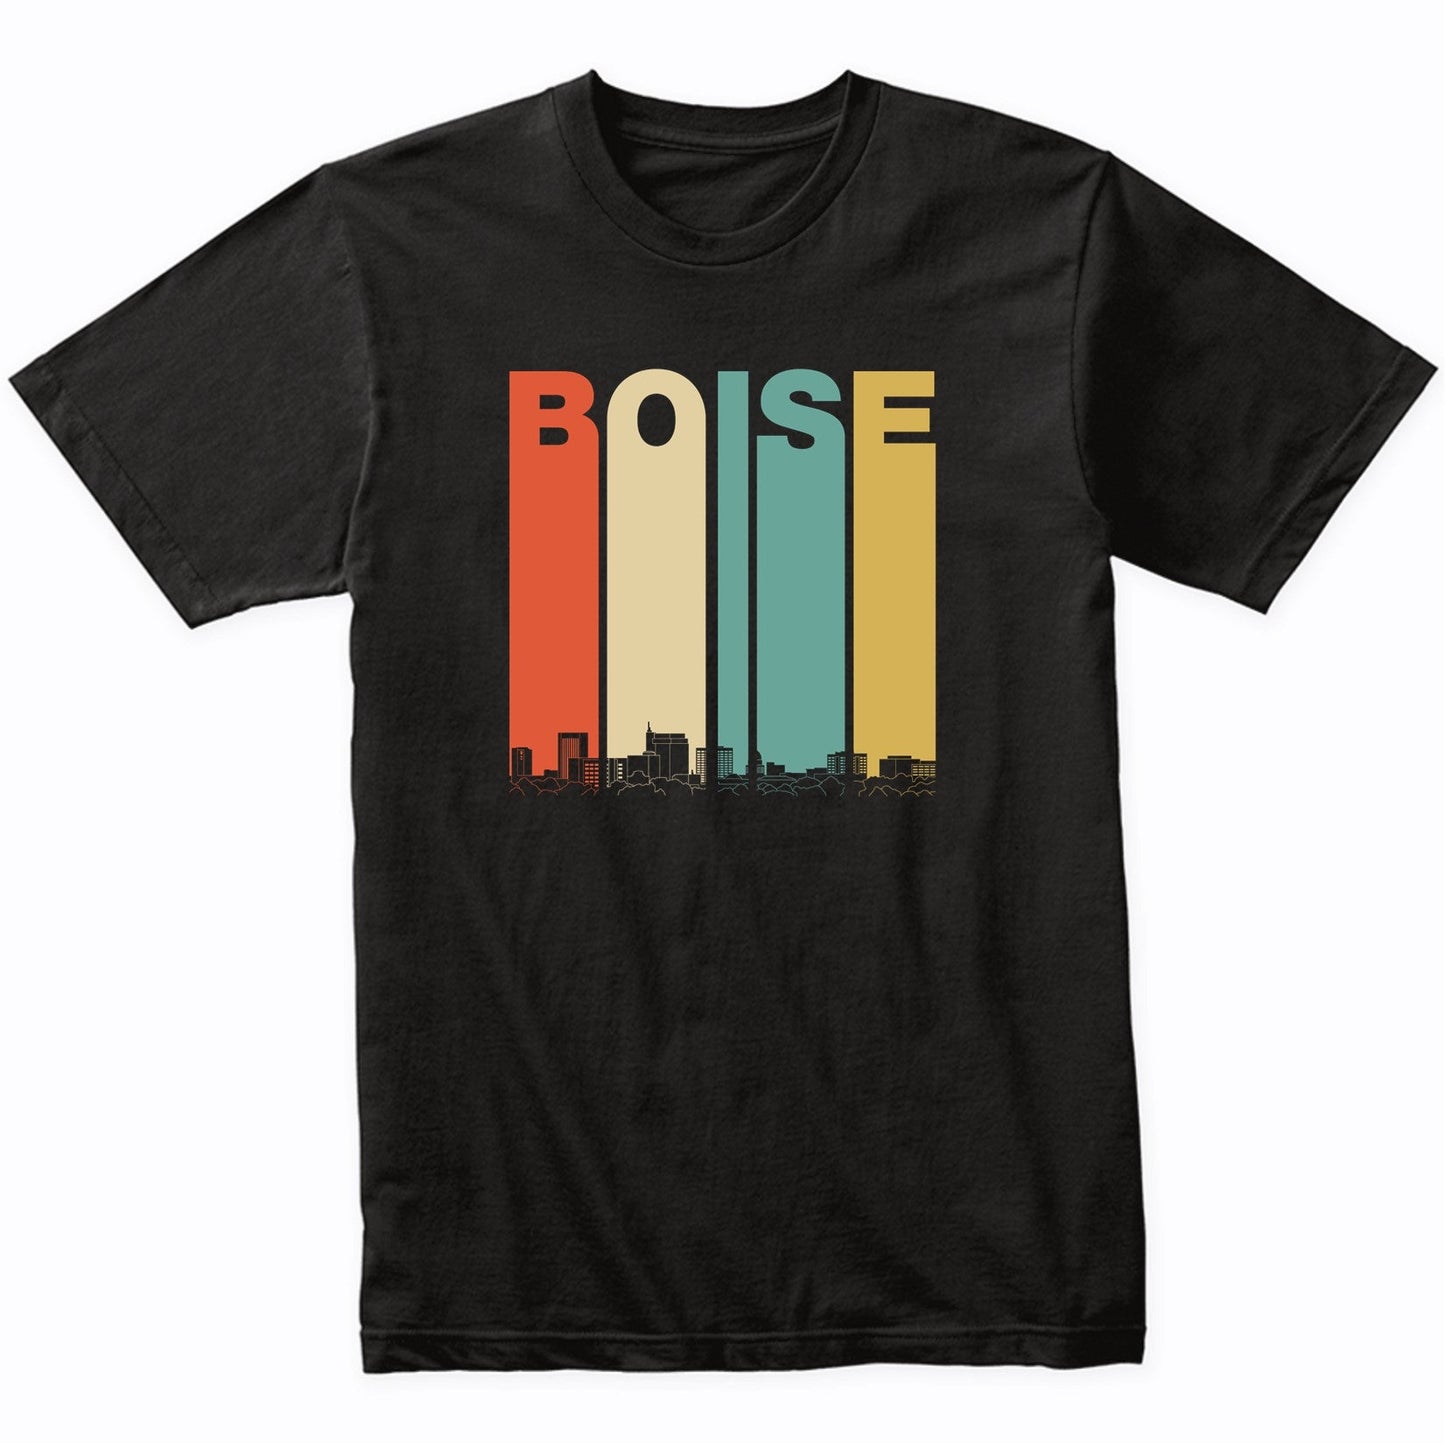 Vintage 1970's Style Boise Idaho Skyline T-Shirt